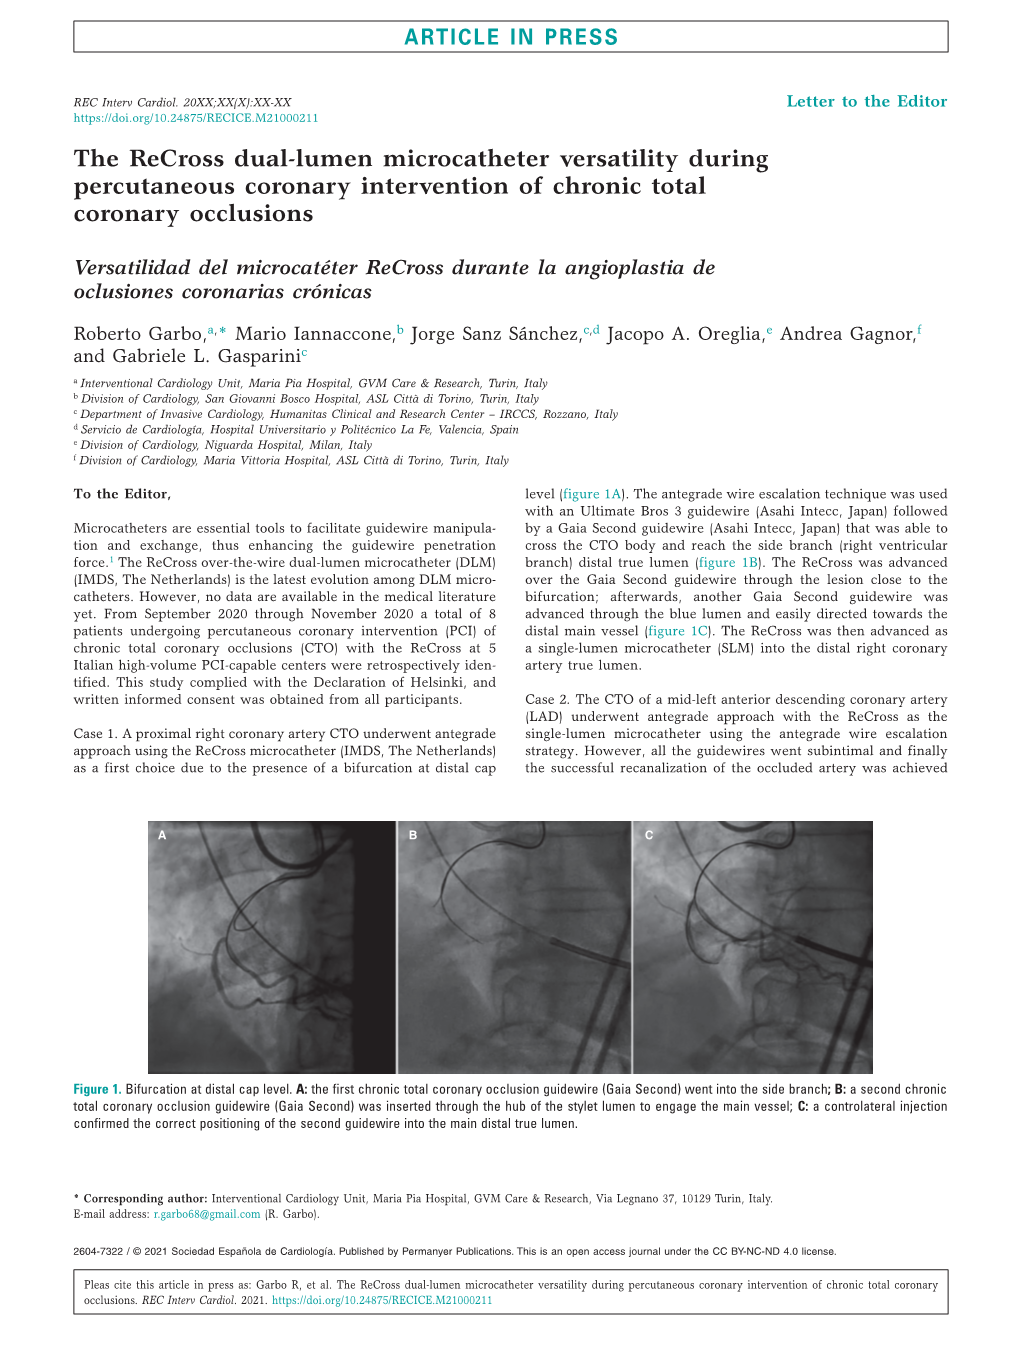 The Recross Dual-Lumen Microcatheter Versatility During Percutaneous Coronary Intervention of Chronic Total Coronary Occlusions